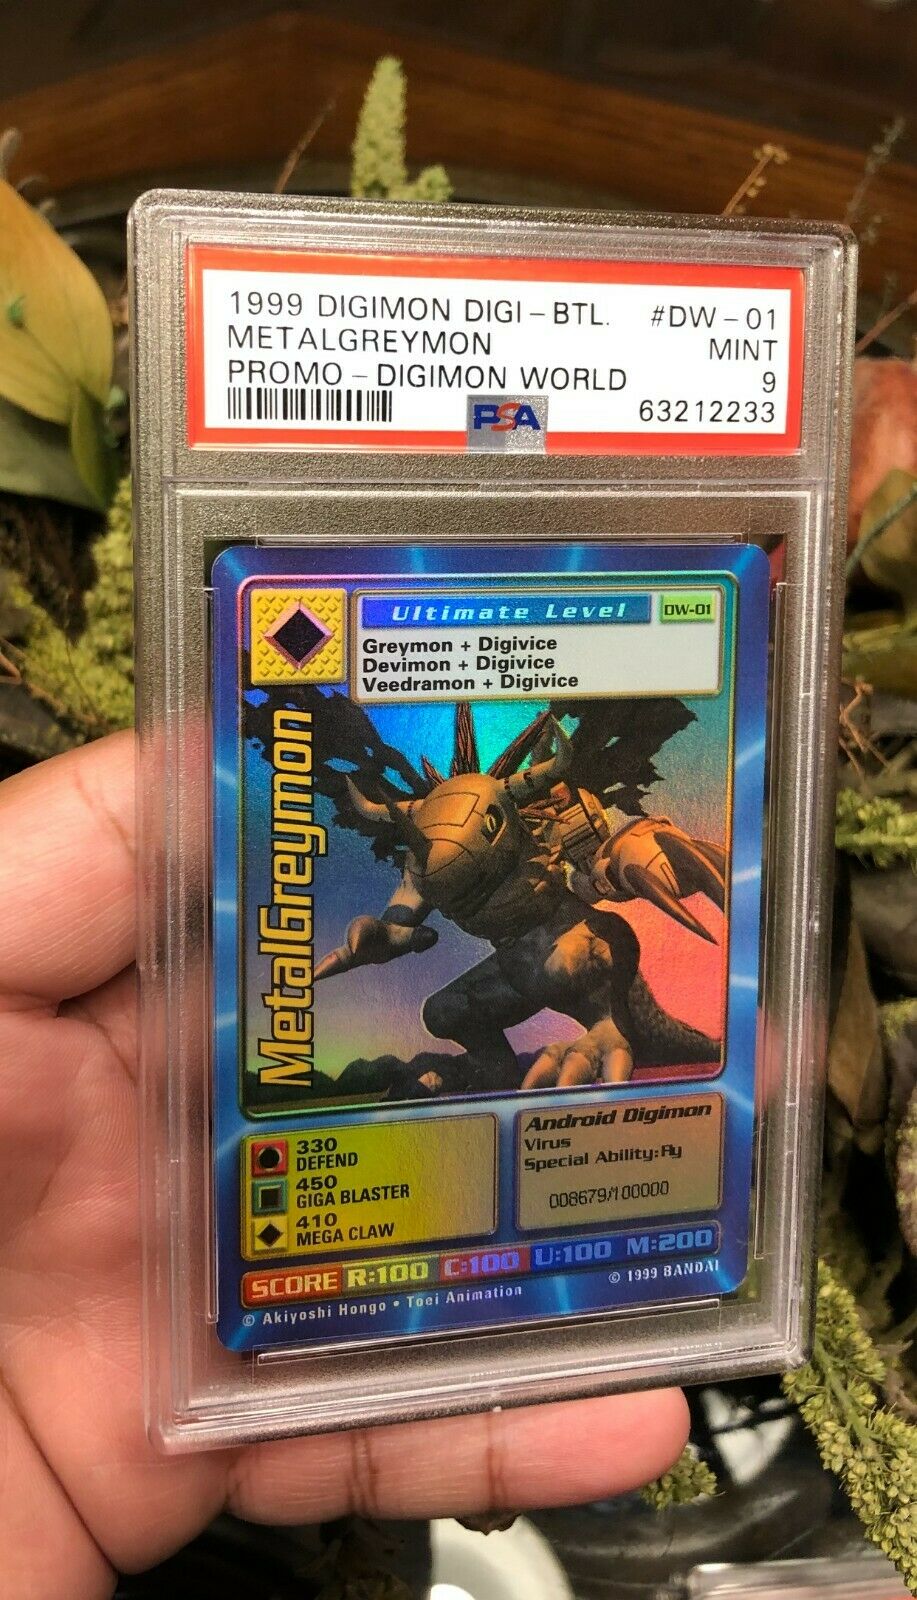 Digimon World PlayStation Promo DW-01 MetalGreymon - number 008679 / 100,000